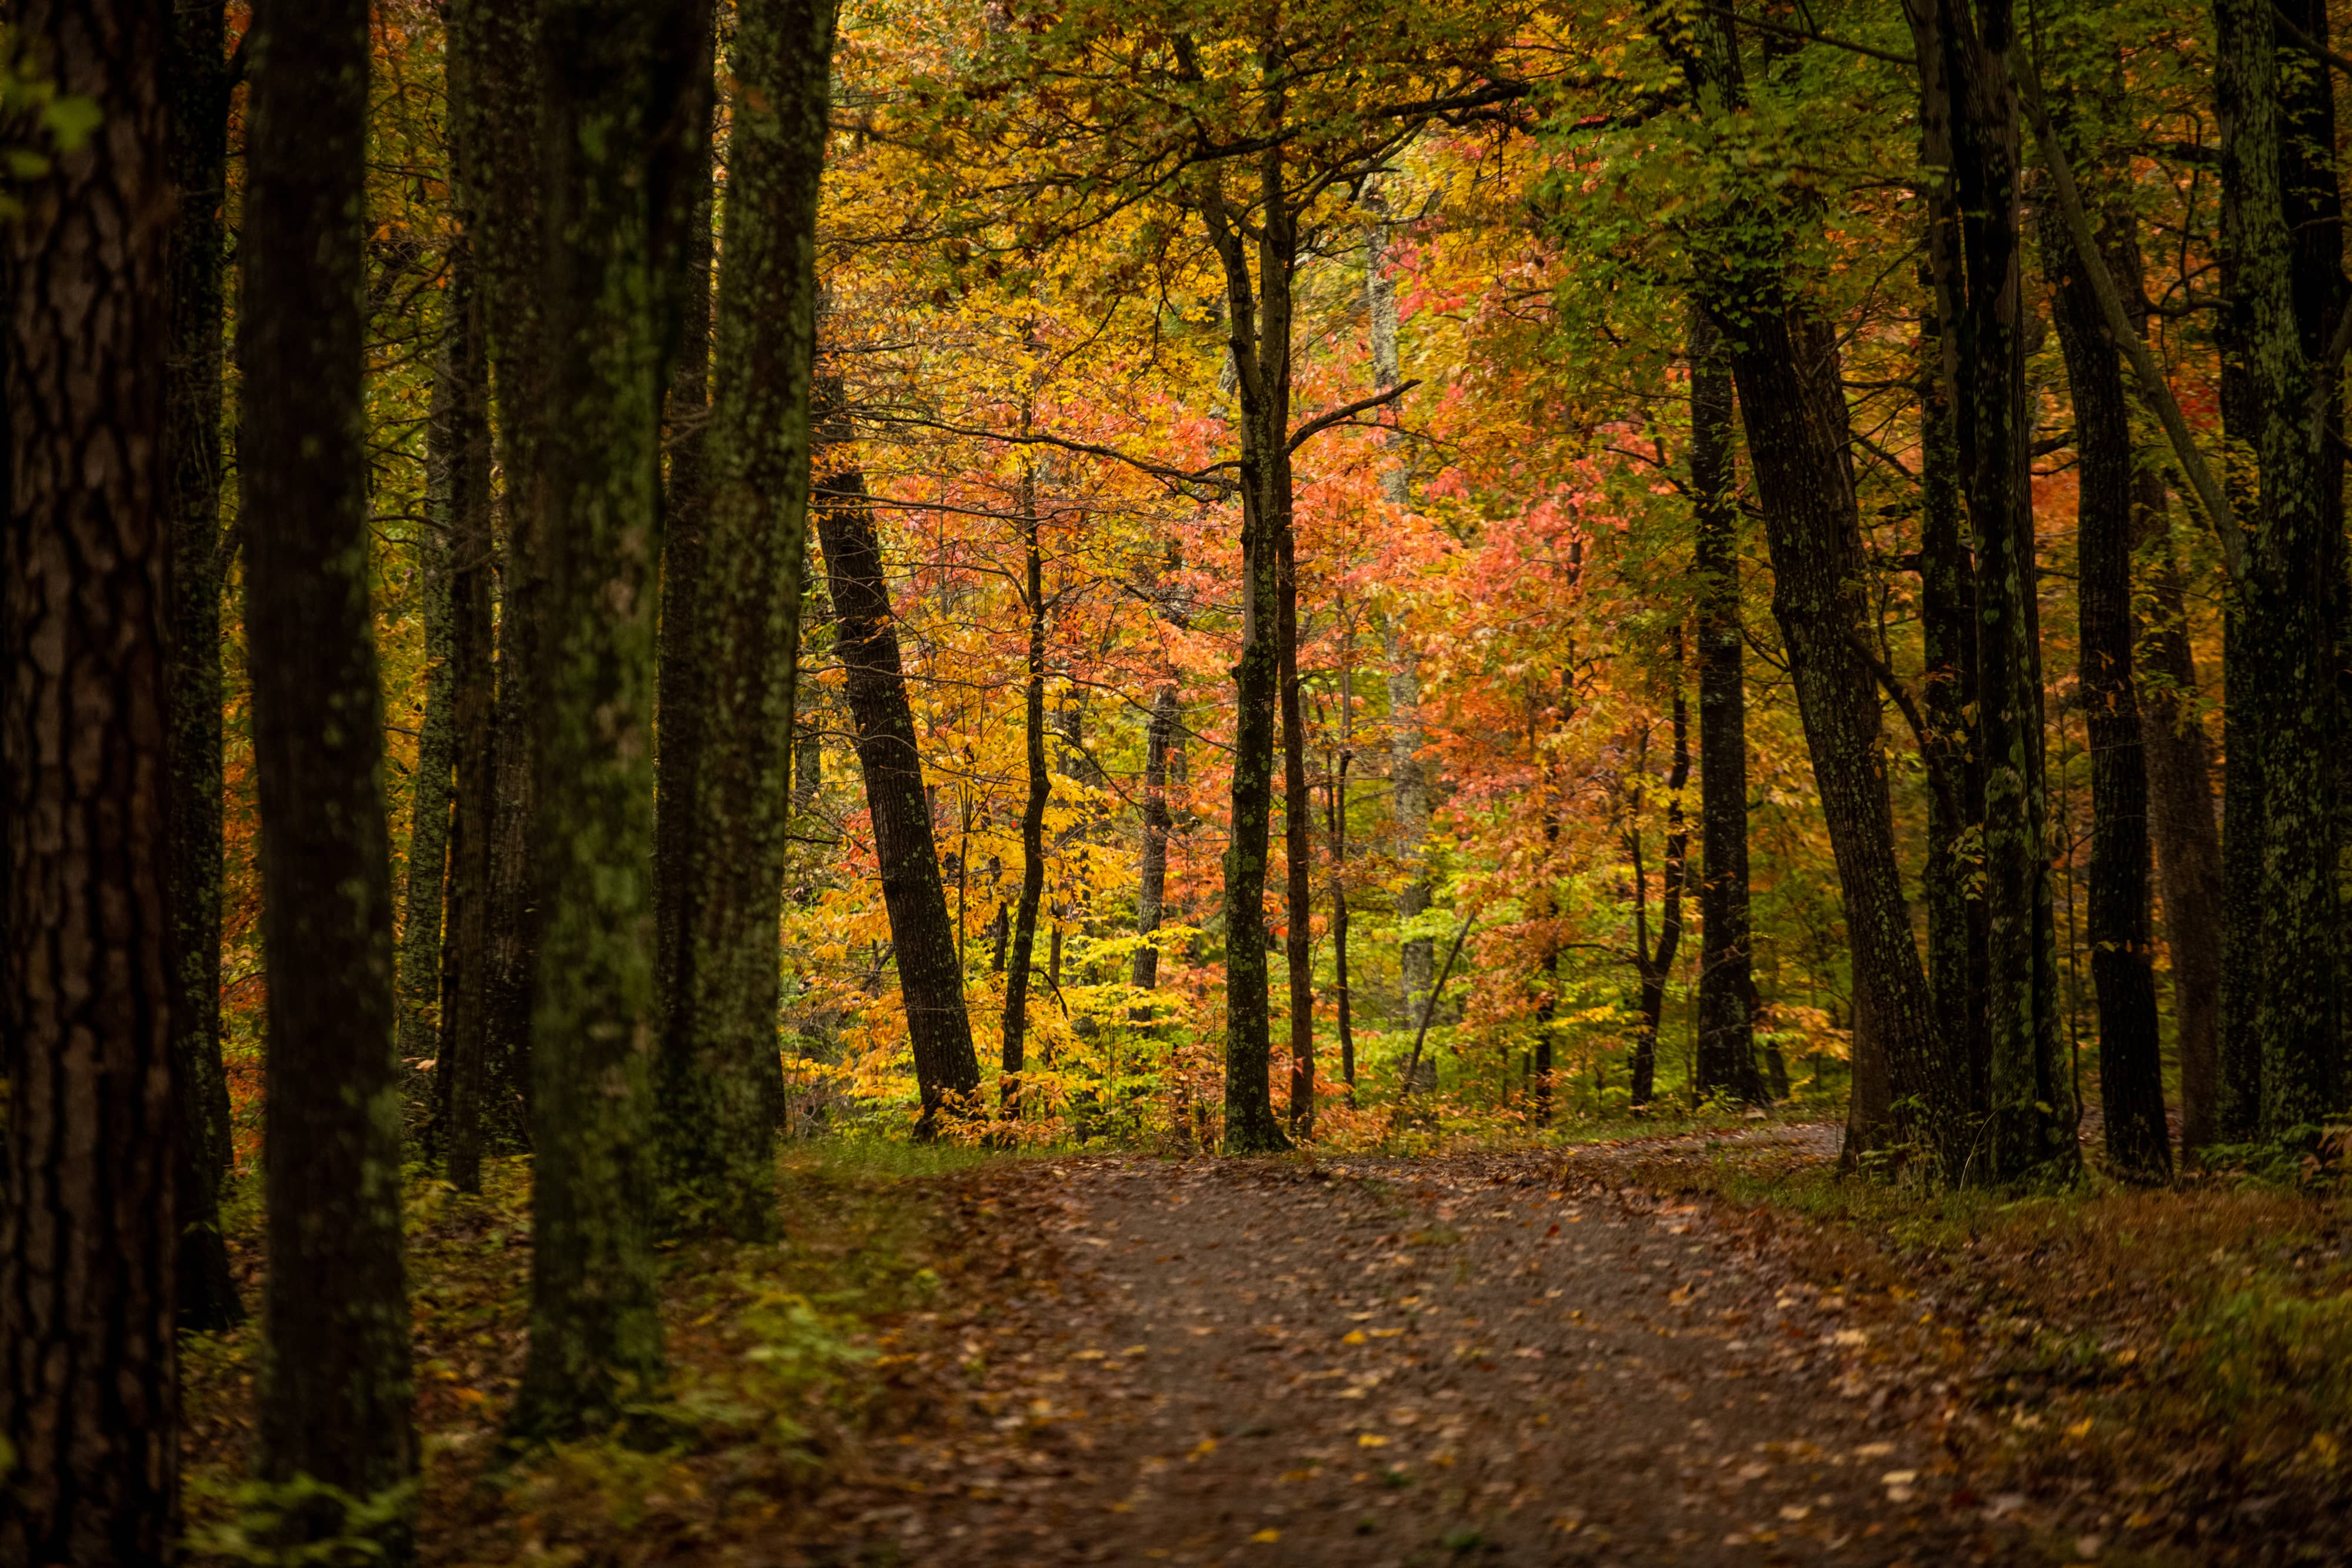 Fall colors at Lake Hope State Park.